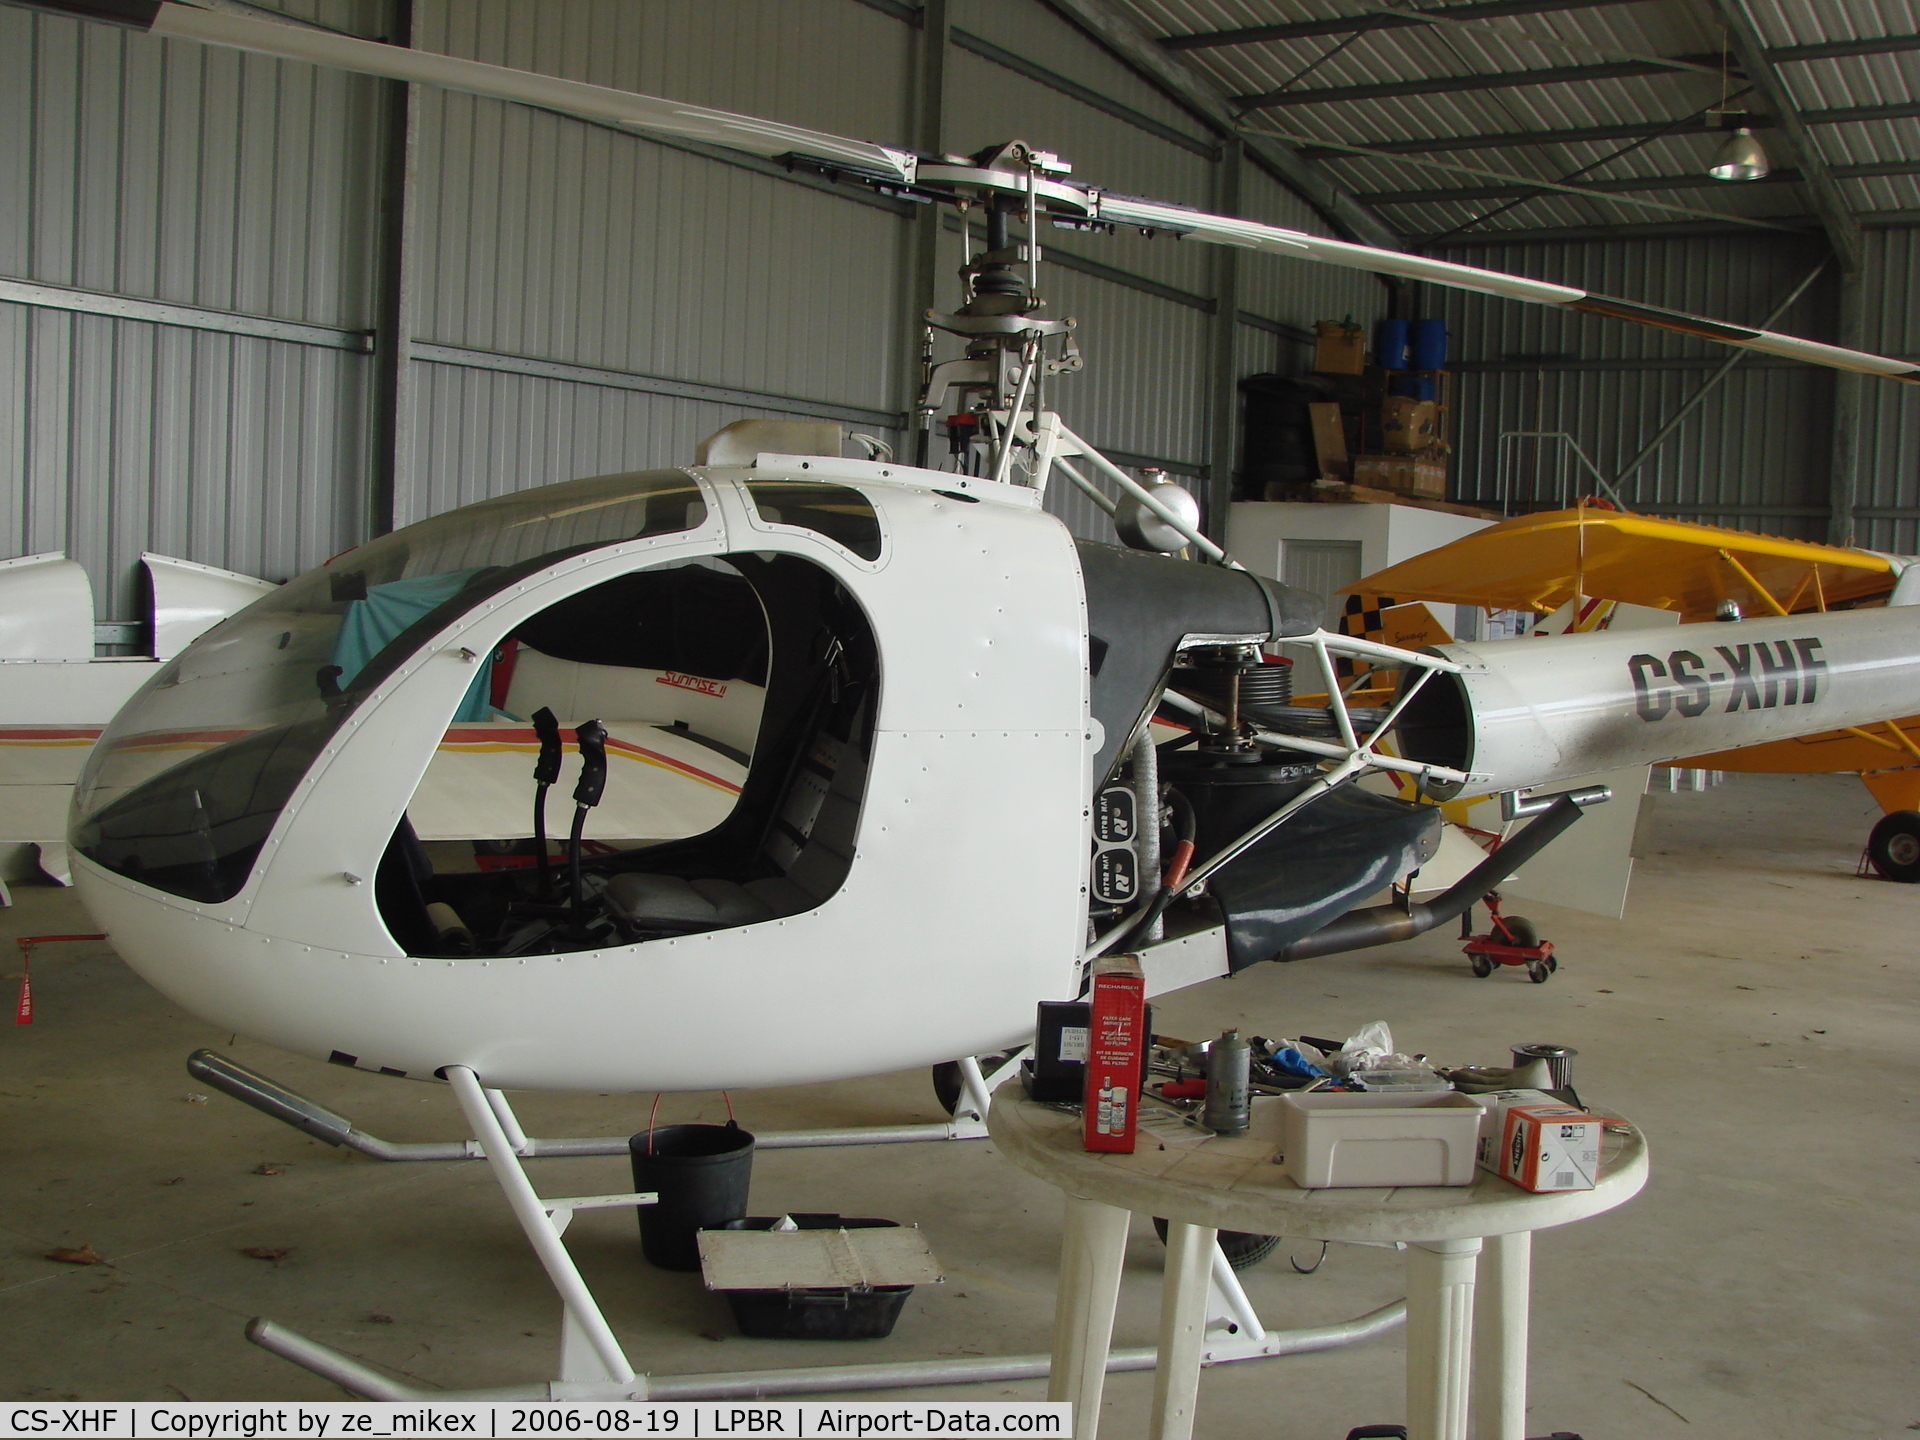 CS-XHF, 2004 Rotorway Exec 162F C/N 6273, ROTOR way helicopter based at Braga Portugal